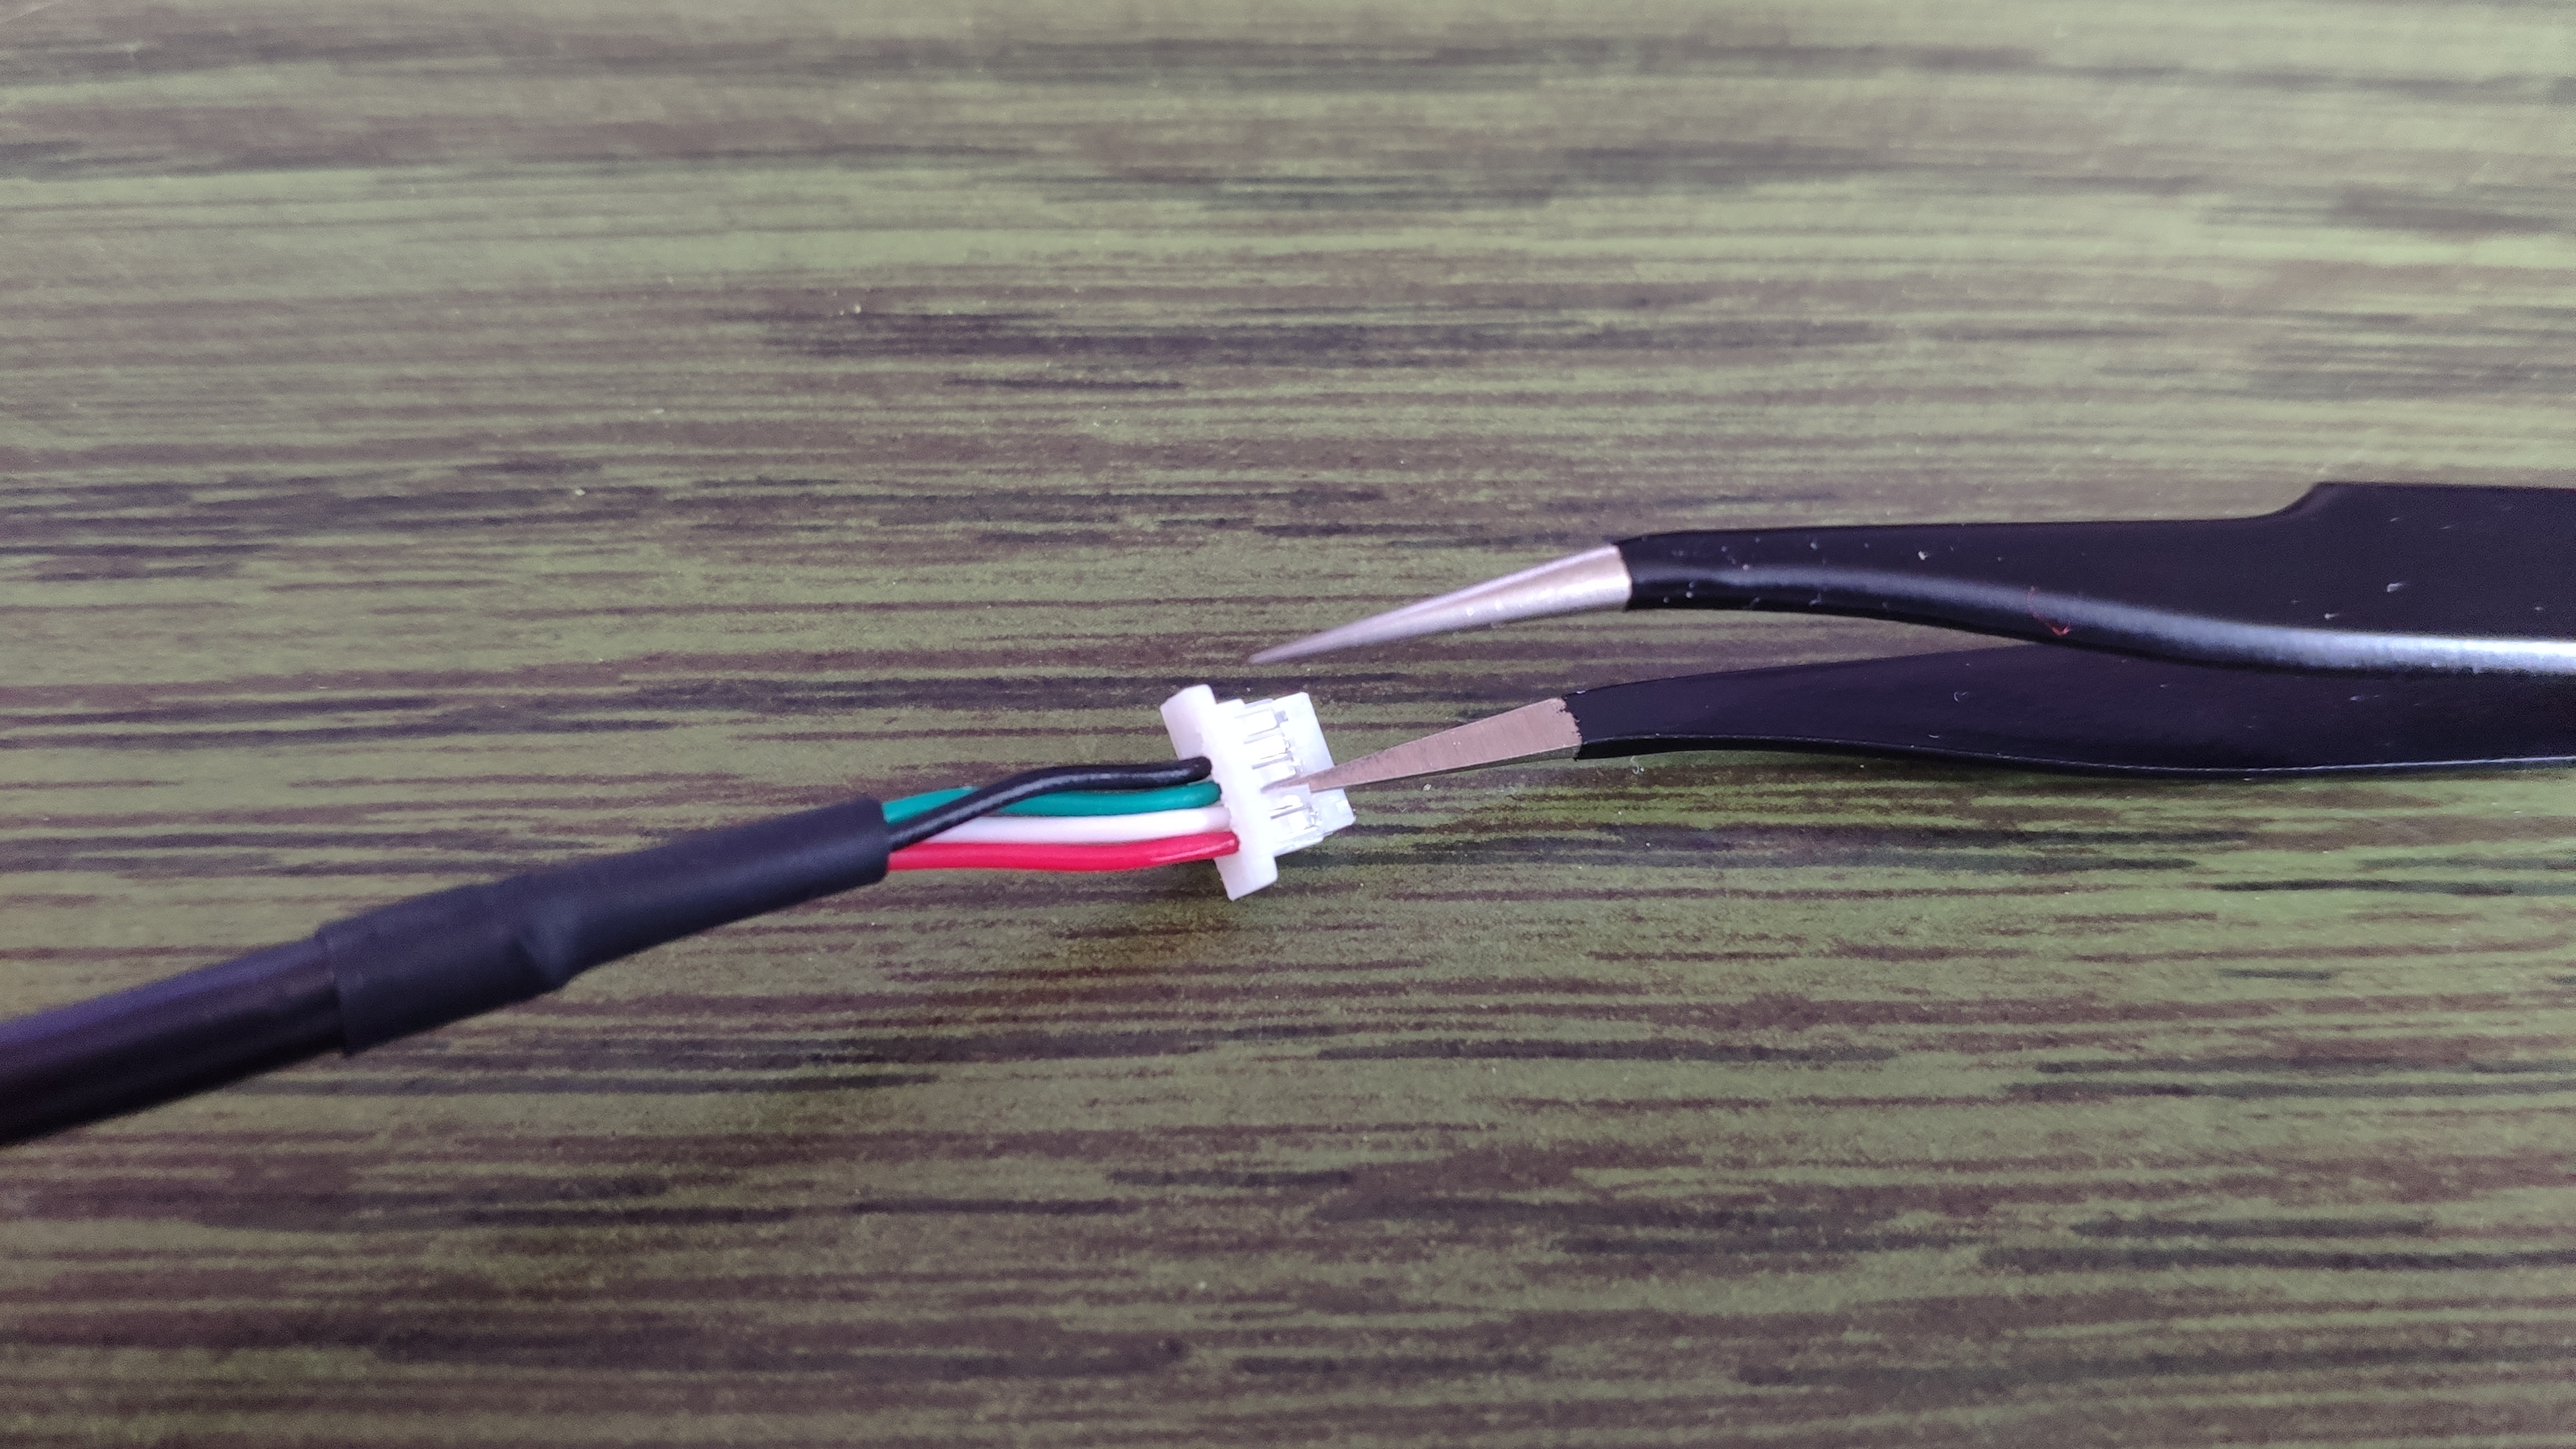 JST SH USB connector